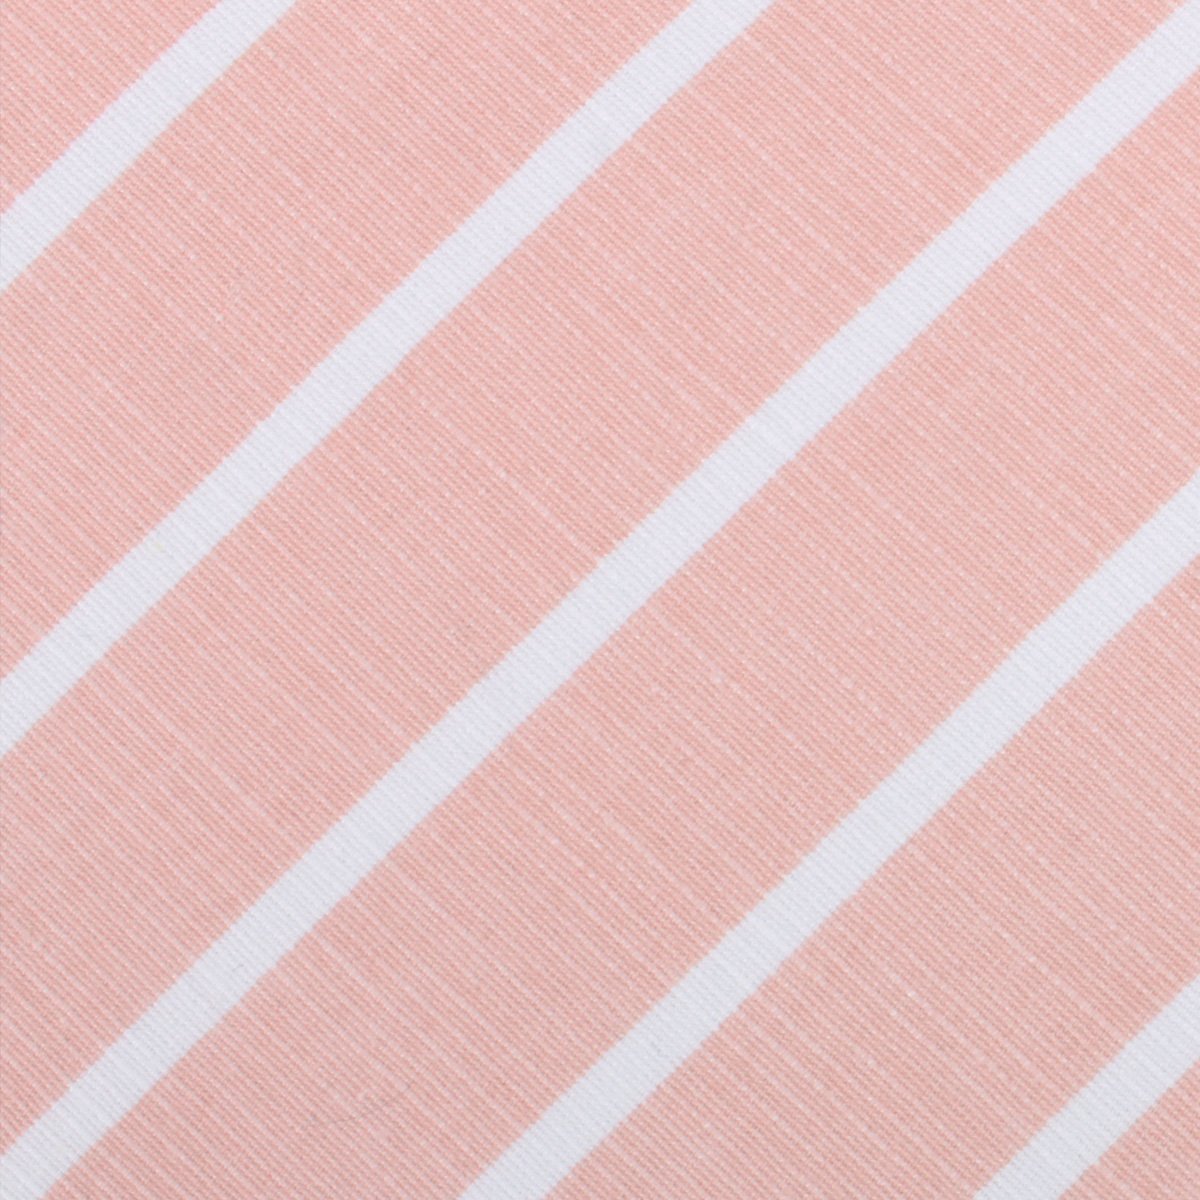 Santorini Pink Blush Striped Linen Skinny Tie Fabric